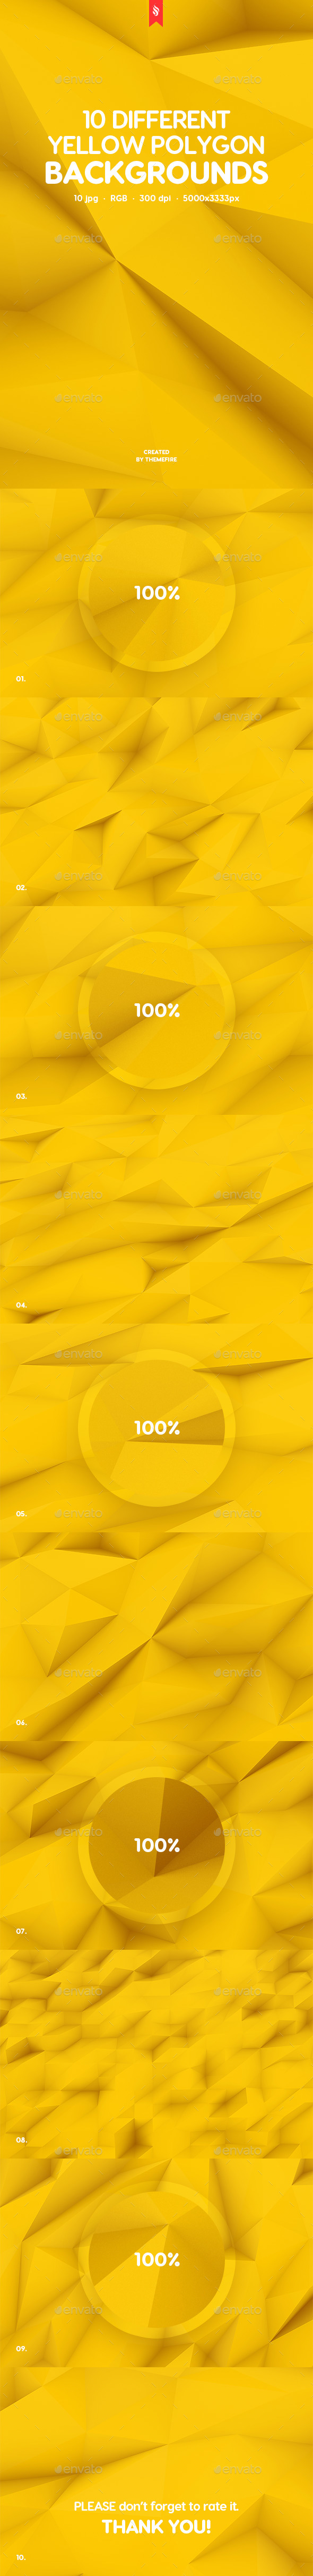 10款不同的抽象多边形背景 10 Different Yellow Polygon Backgrounds插图